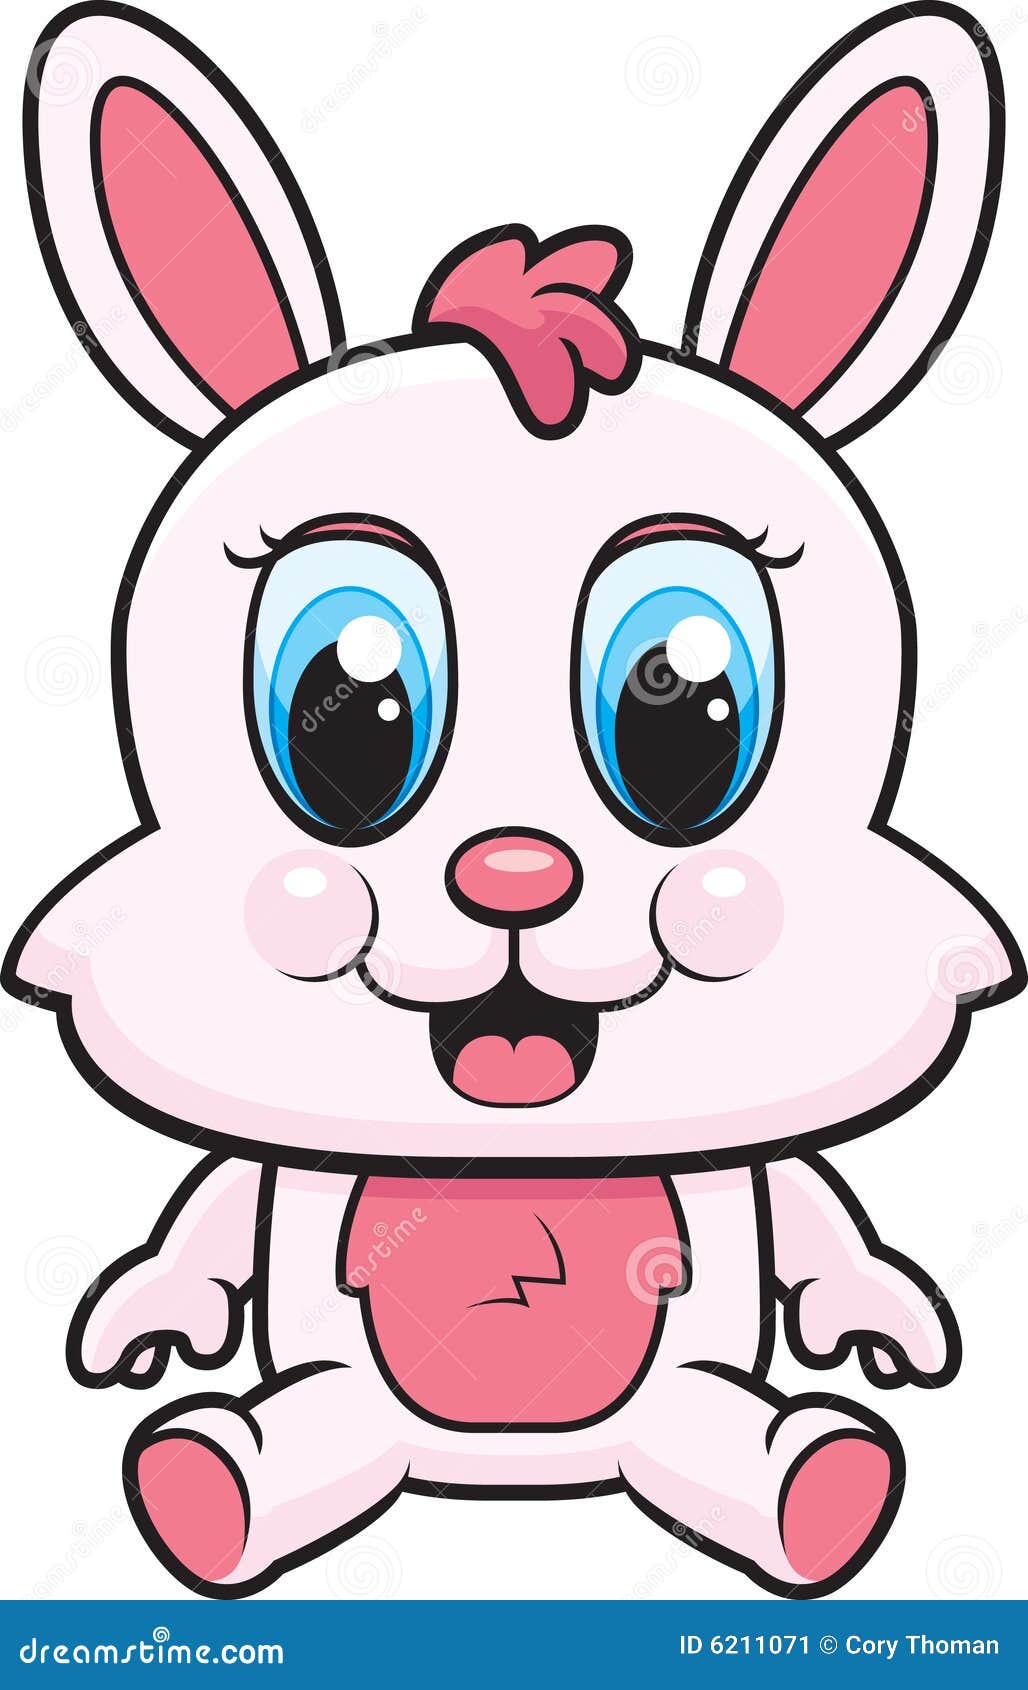 A cute baby rabbit cartoon. - baby-bunny-6211071